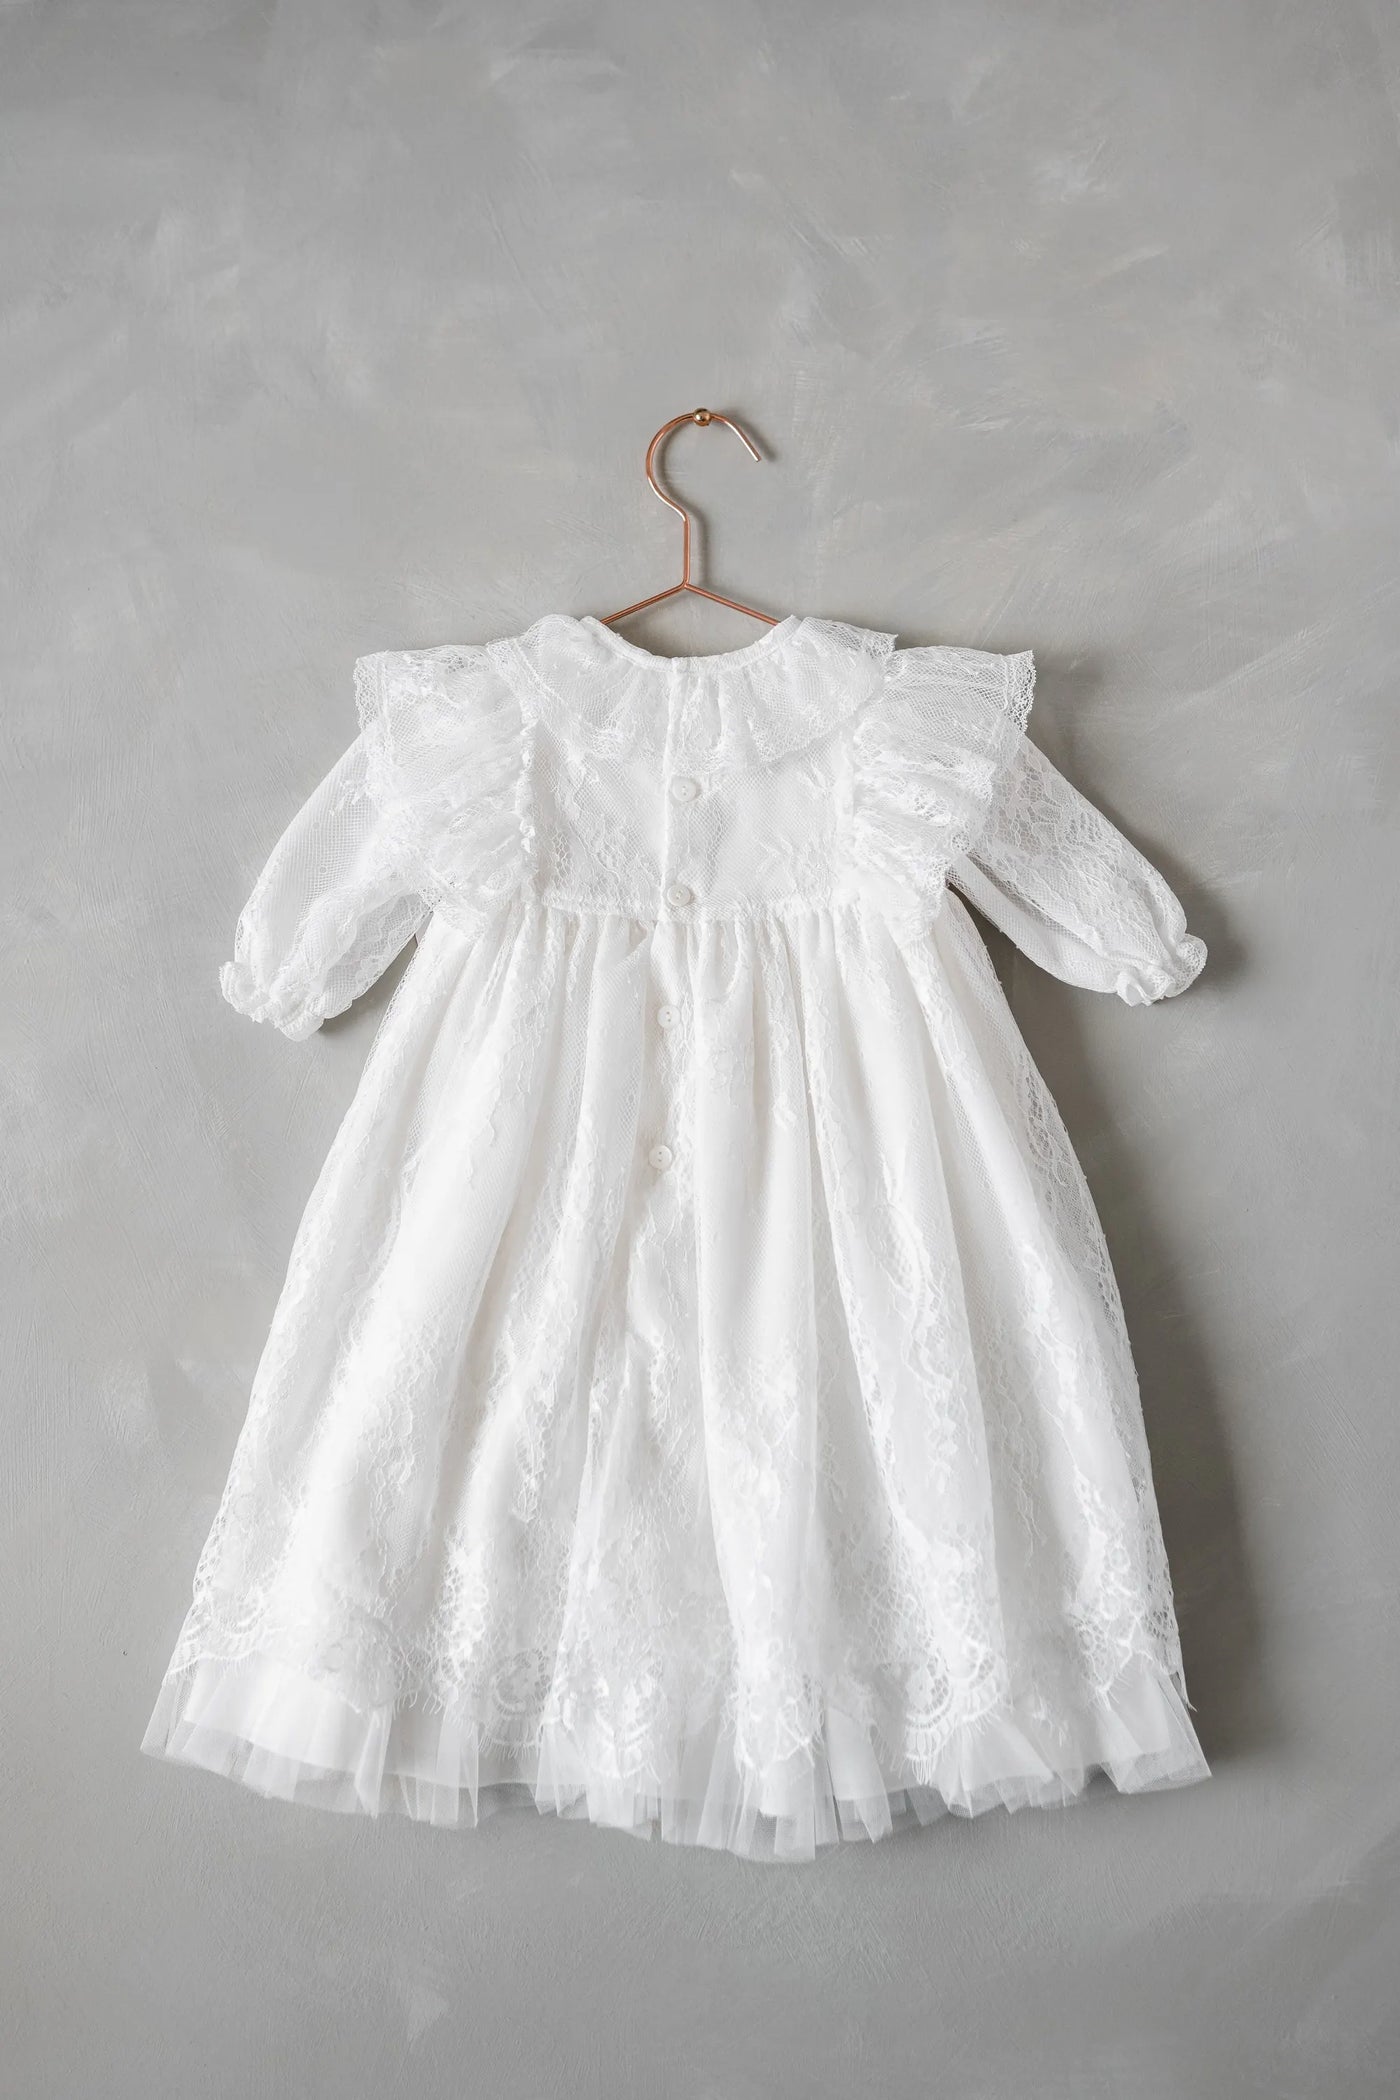 White Lace Christening Dress